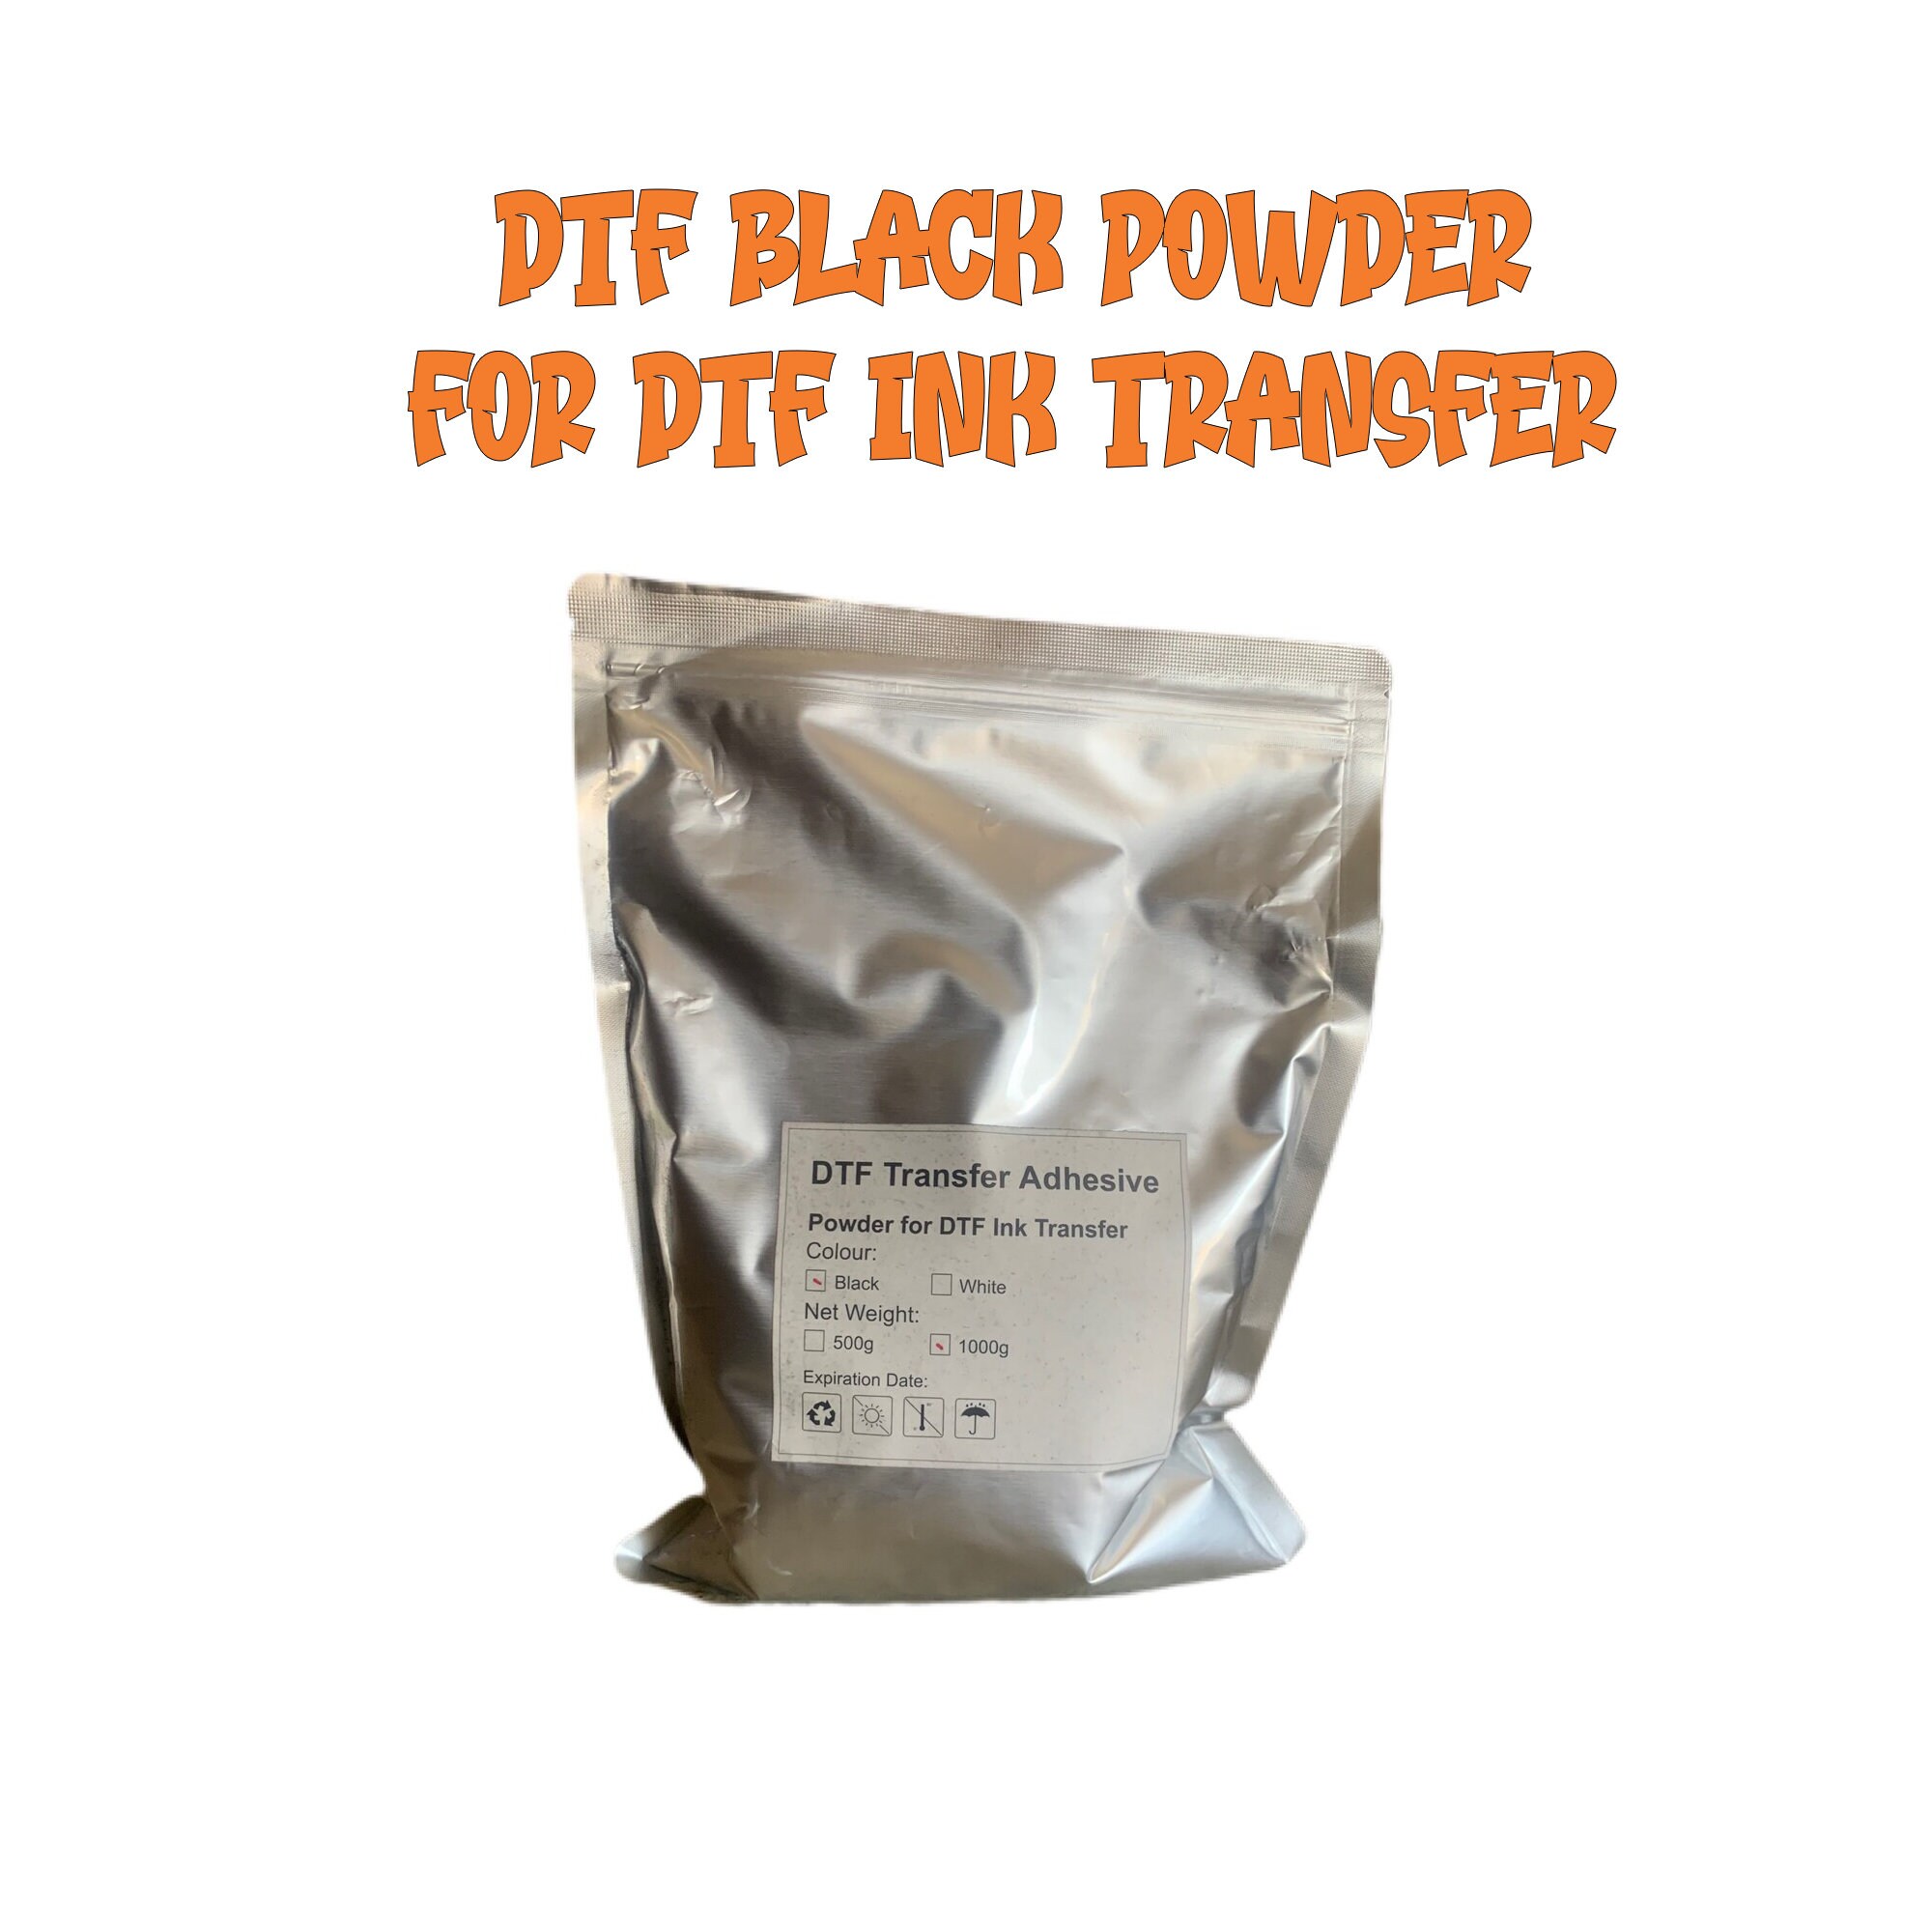 Yamation DTF Powder Kit, DTF Adhesive Powder Include Fine Medium Coarse,  White Black DTF Transfer Powder Hot Melt Adhesive Applies 